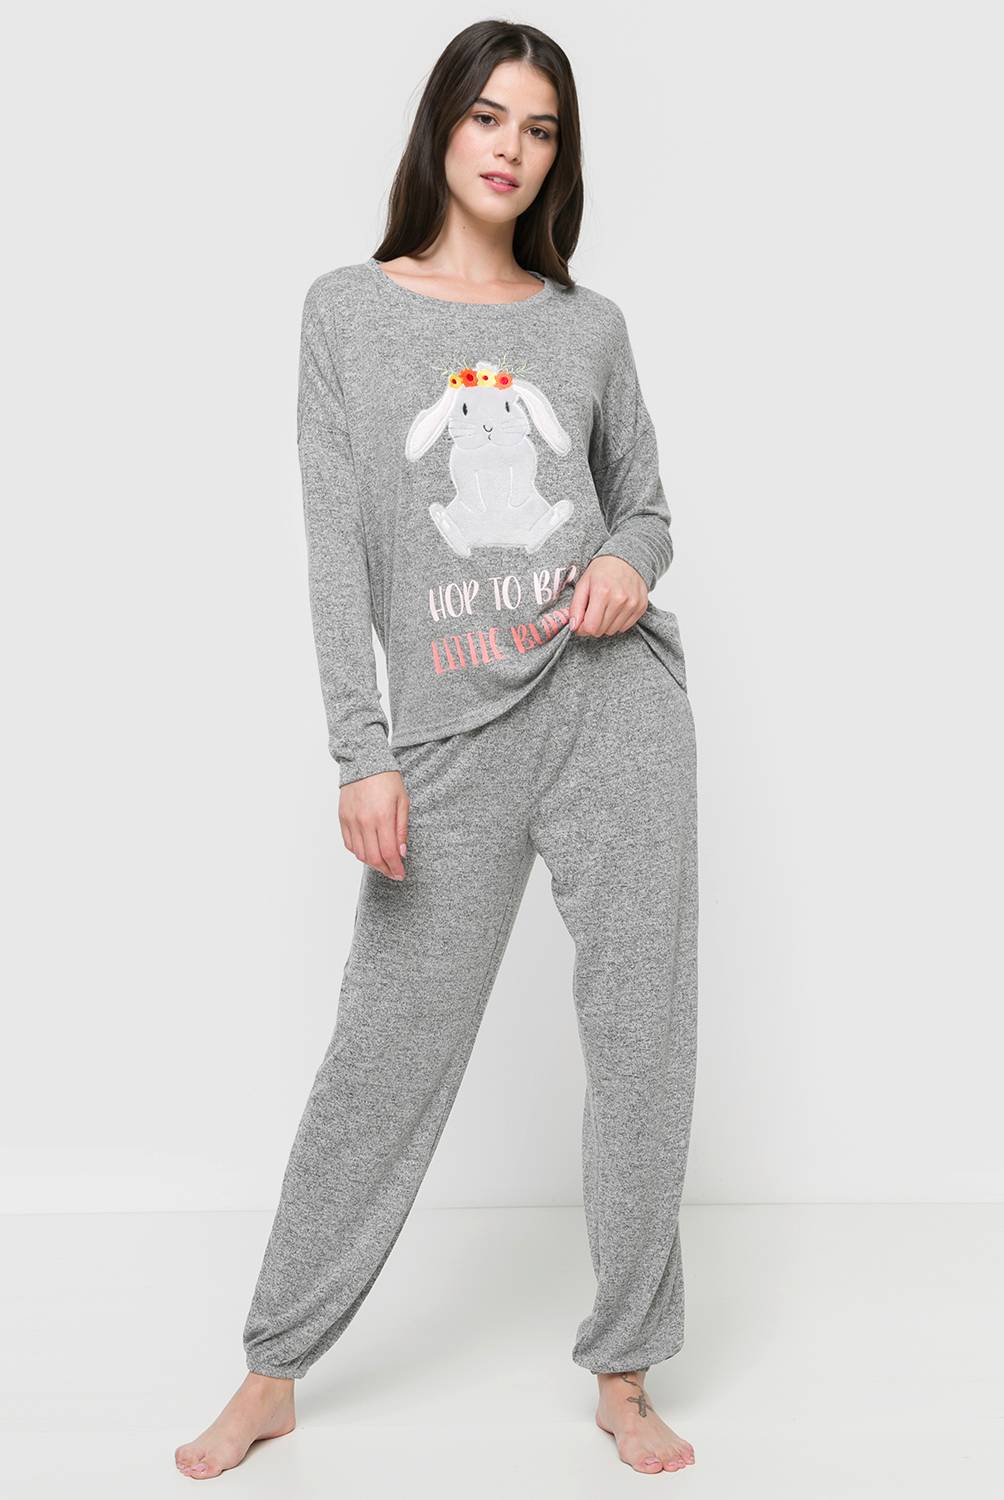 SYBILLA - Pijama mujer tejido